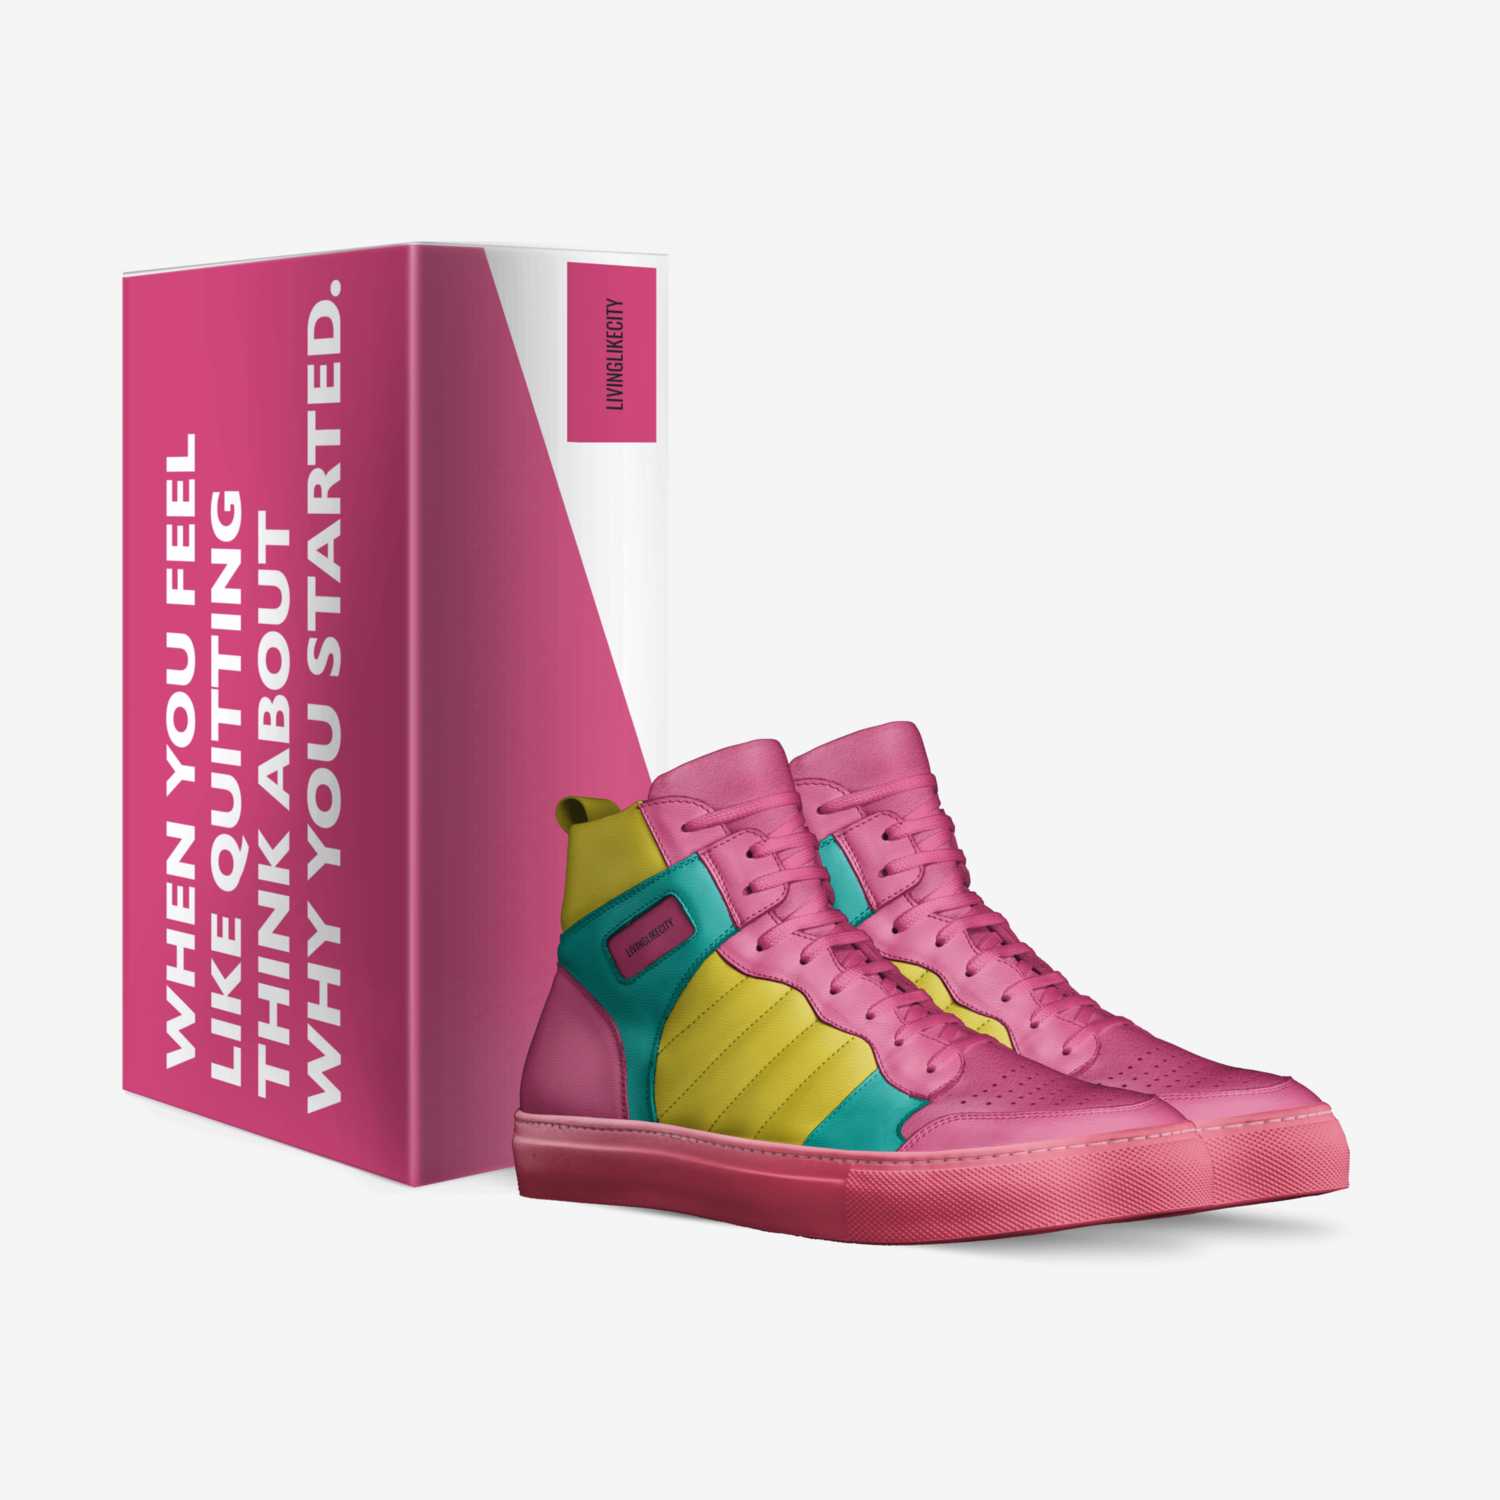 livinglikecity custom made in Italy shoes by Serena Dalzell | Box view